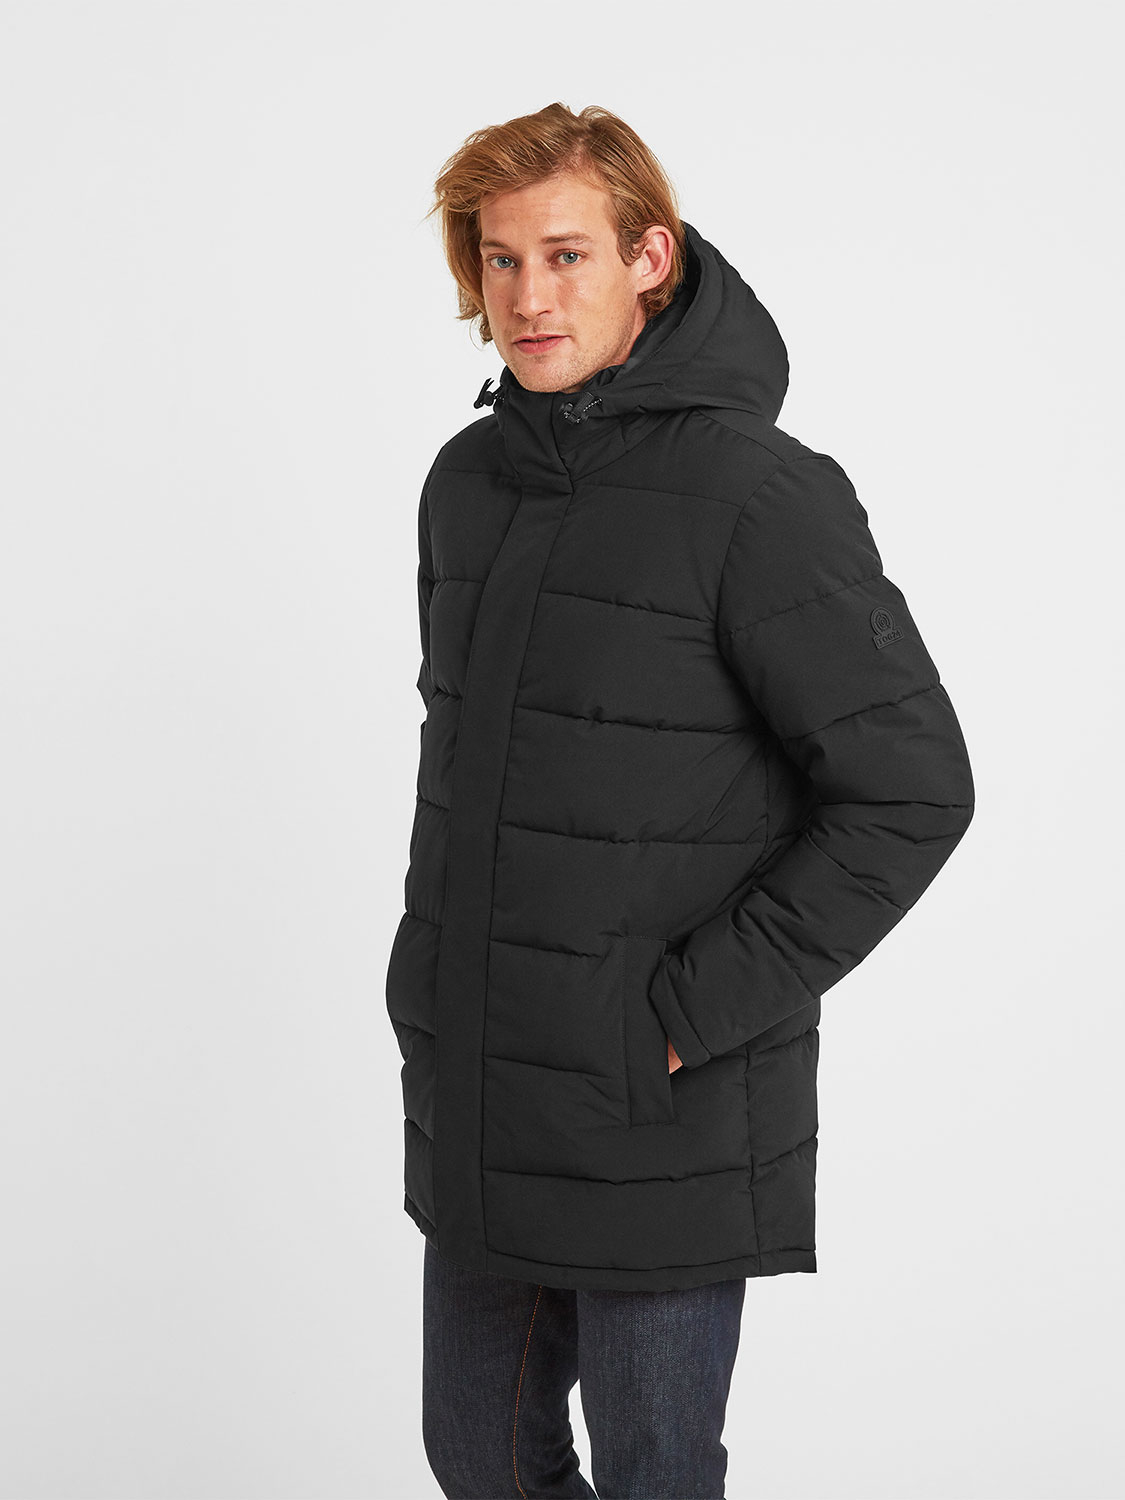 Watson Long Insulated Jacket - Size: 3XL Men’s Black Tog24